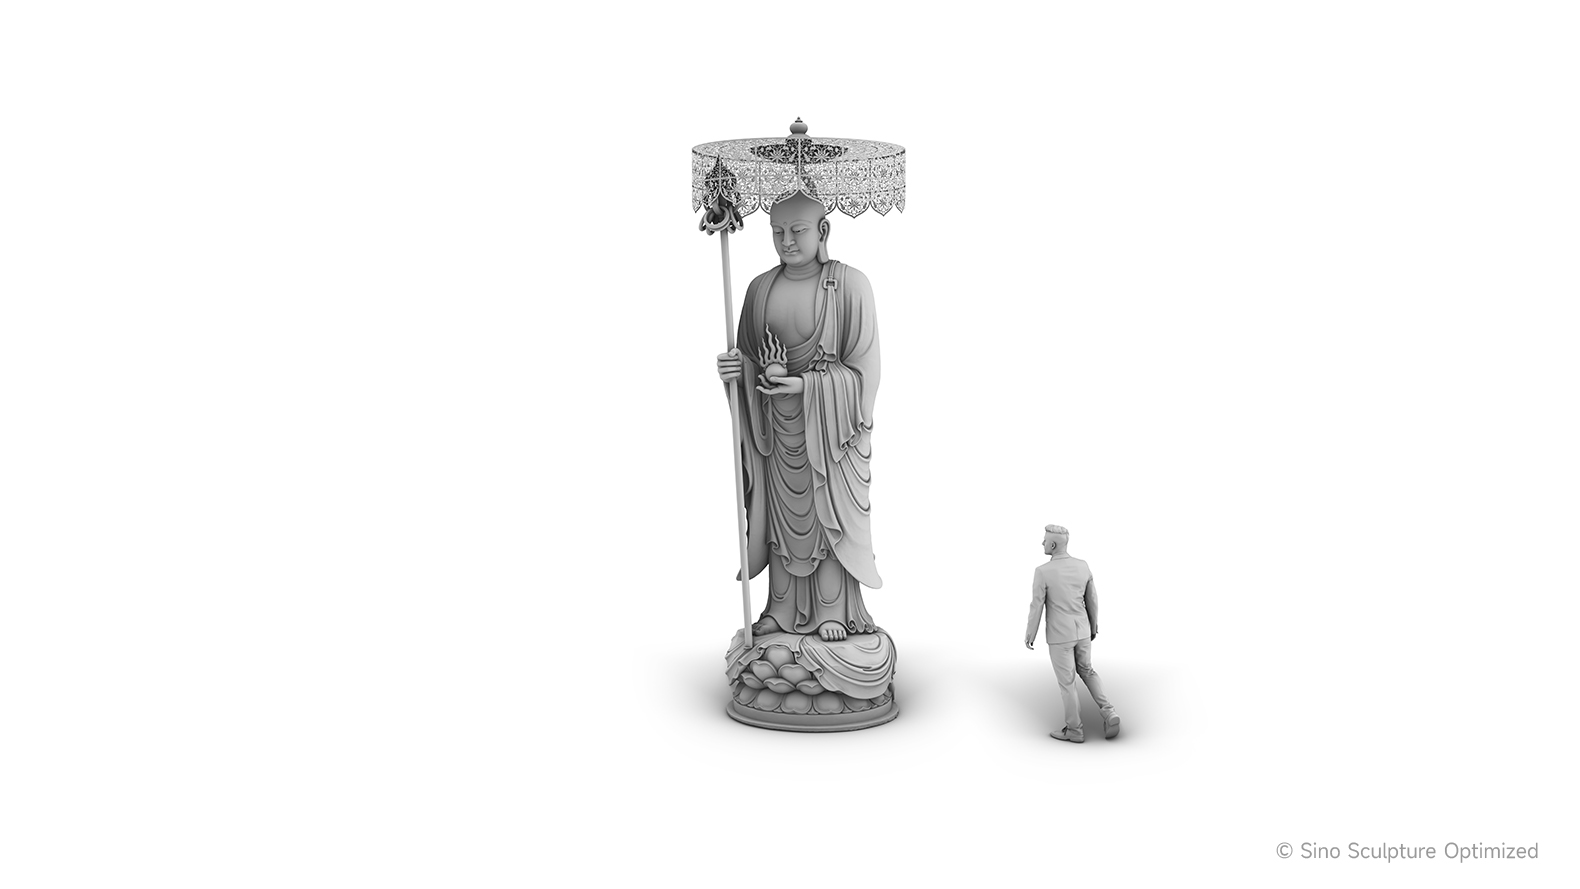 3D model of the gold leaf bronze casting Buddha statue for KMSPKS, Singapore